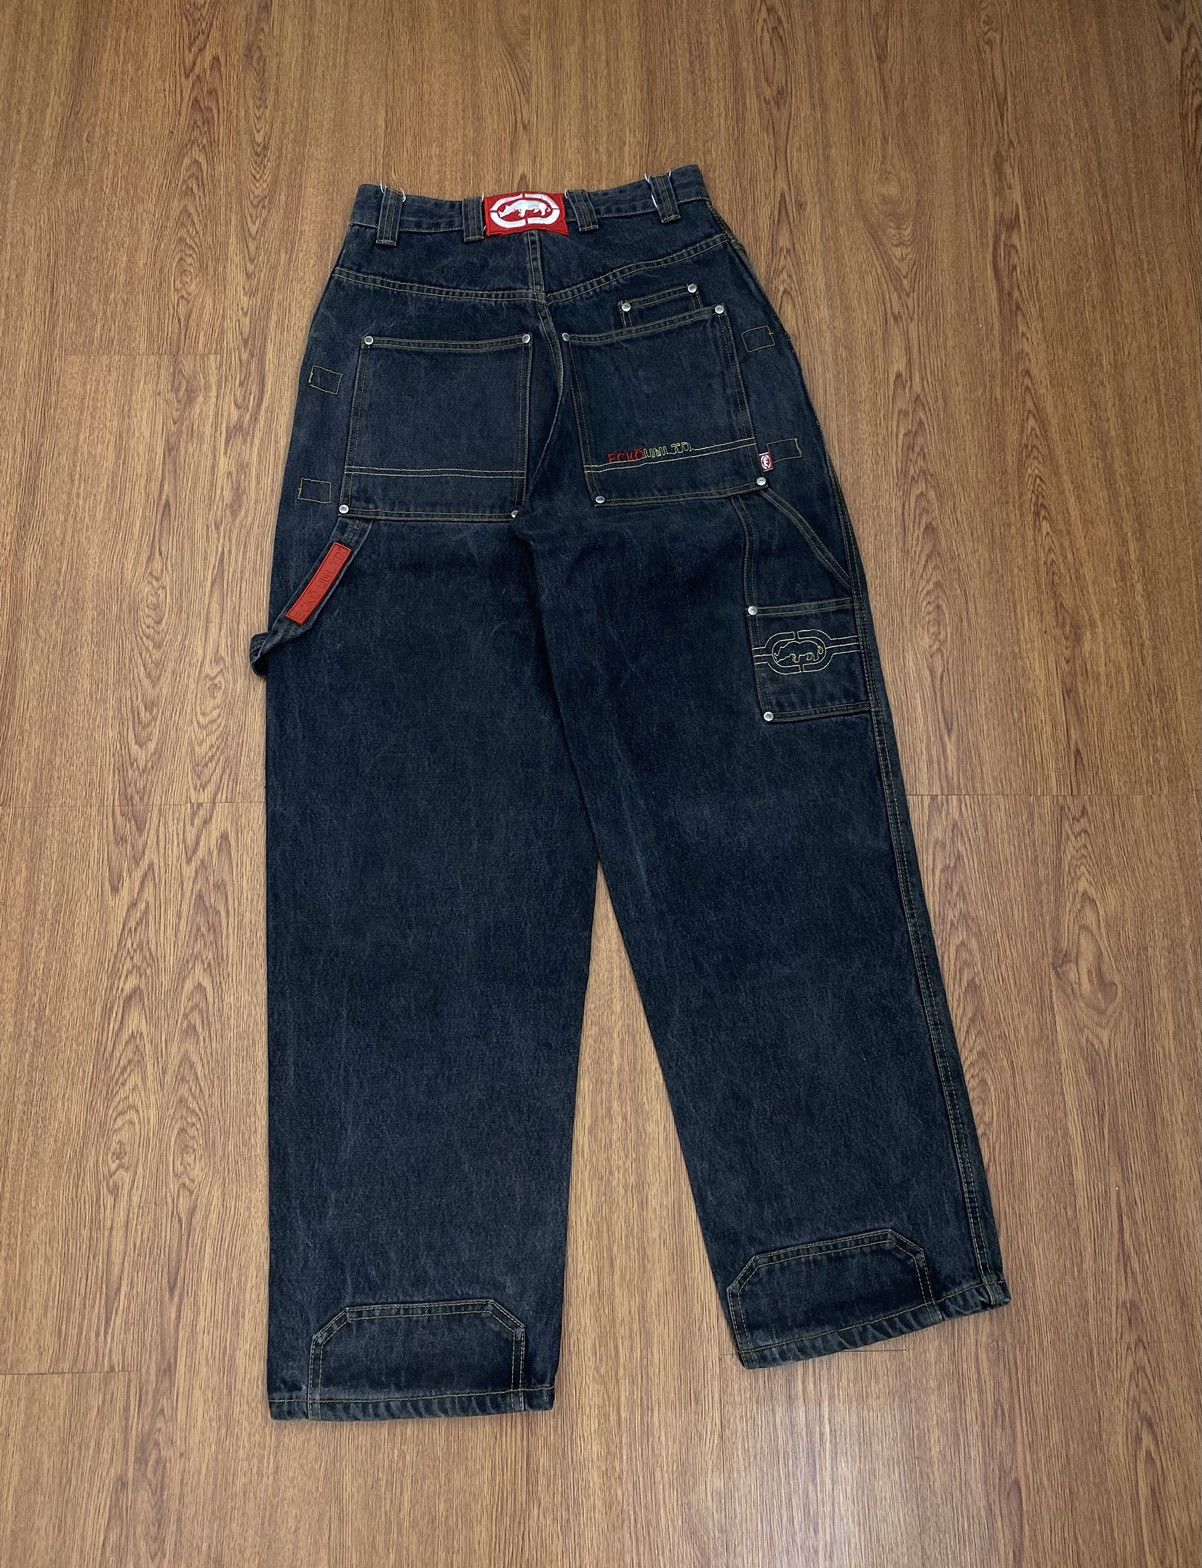 Vintage Vintage Ecko unltd baggy jeans | Grailed